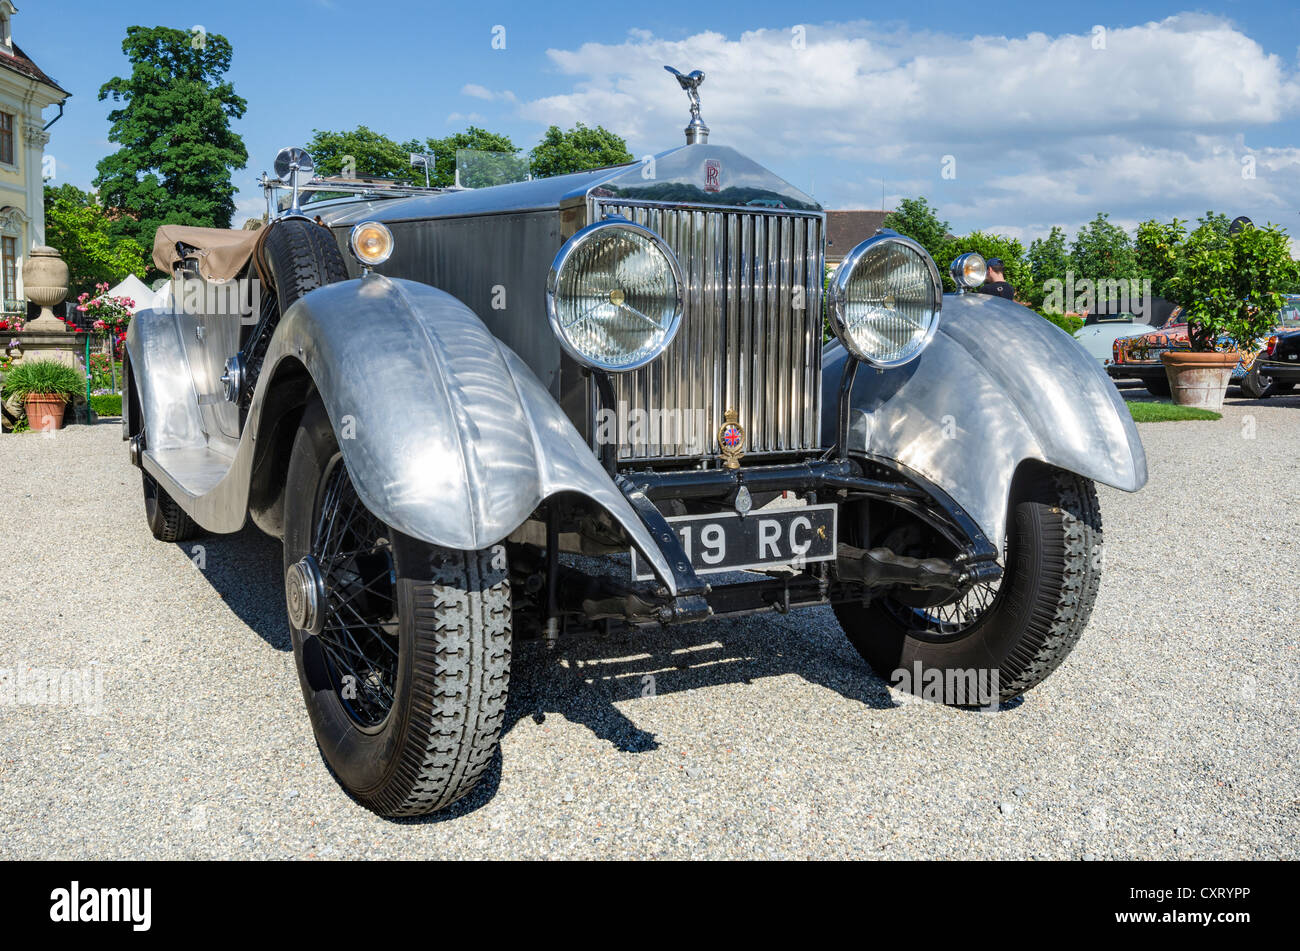 Rolls-Royce Phantom I, built from 1926, festival of classic cars, 'Retro Classics meets Barock', Schloss Ludwigsburg Palace Stock Photo